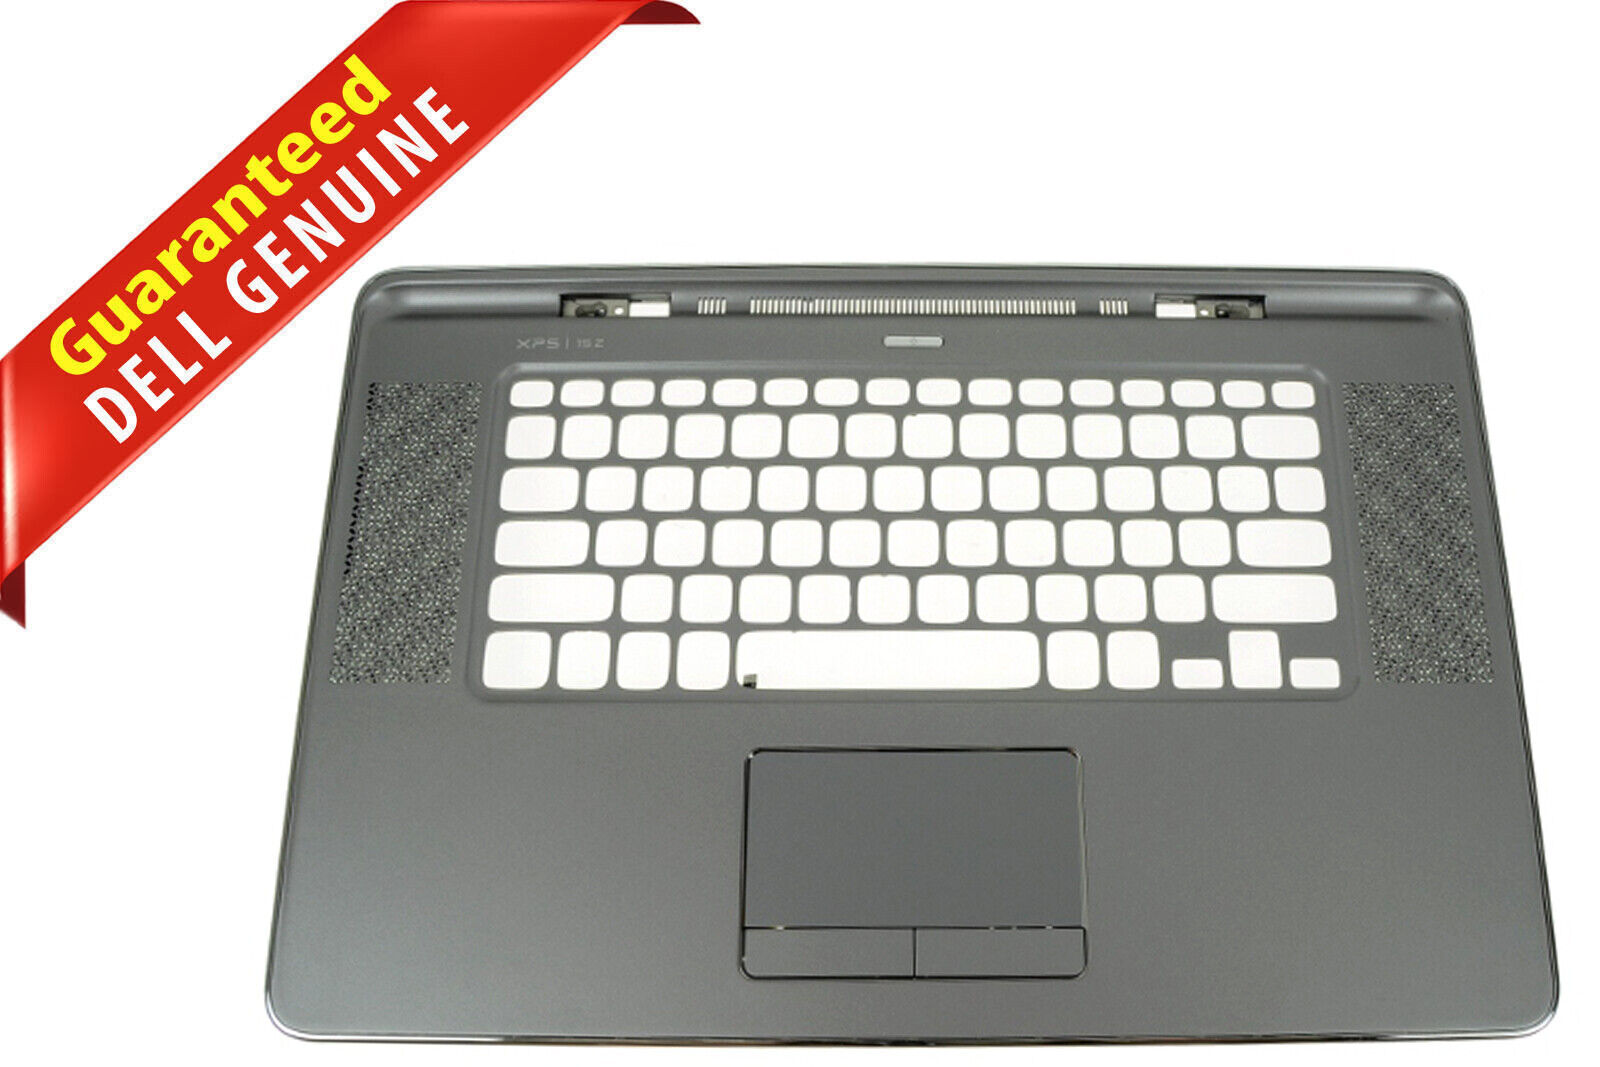 Dell XPS 15Z L511Z Palmrest Touchpad Keyboard Assembly Chrome Trim Silver 0XN7R